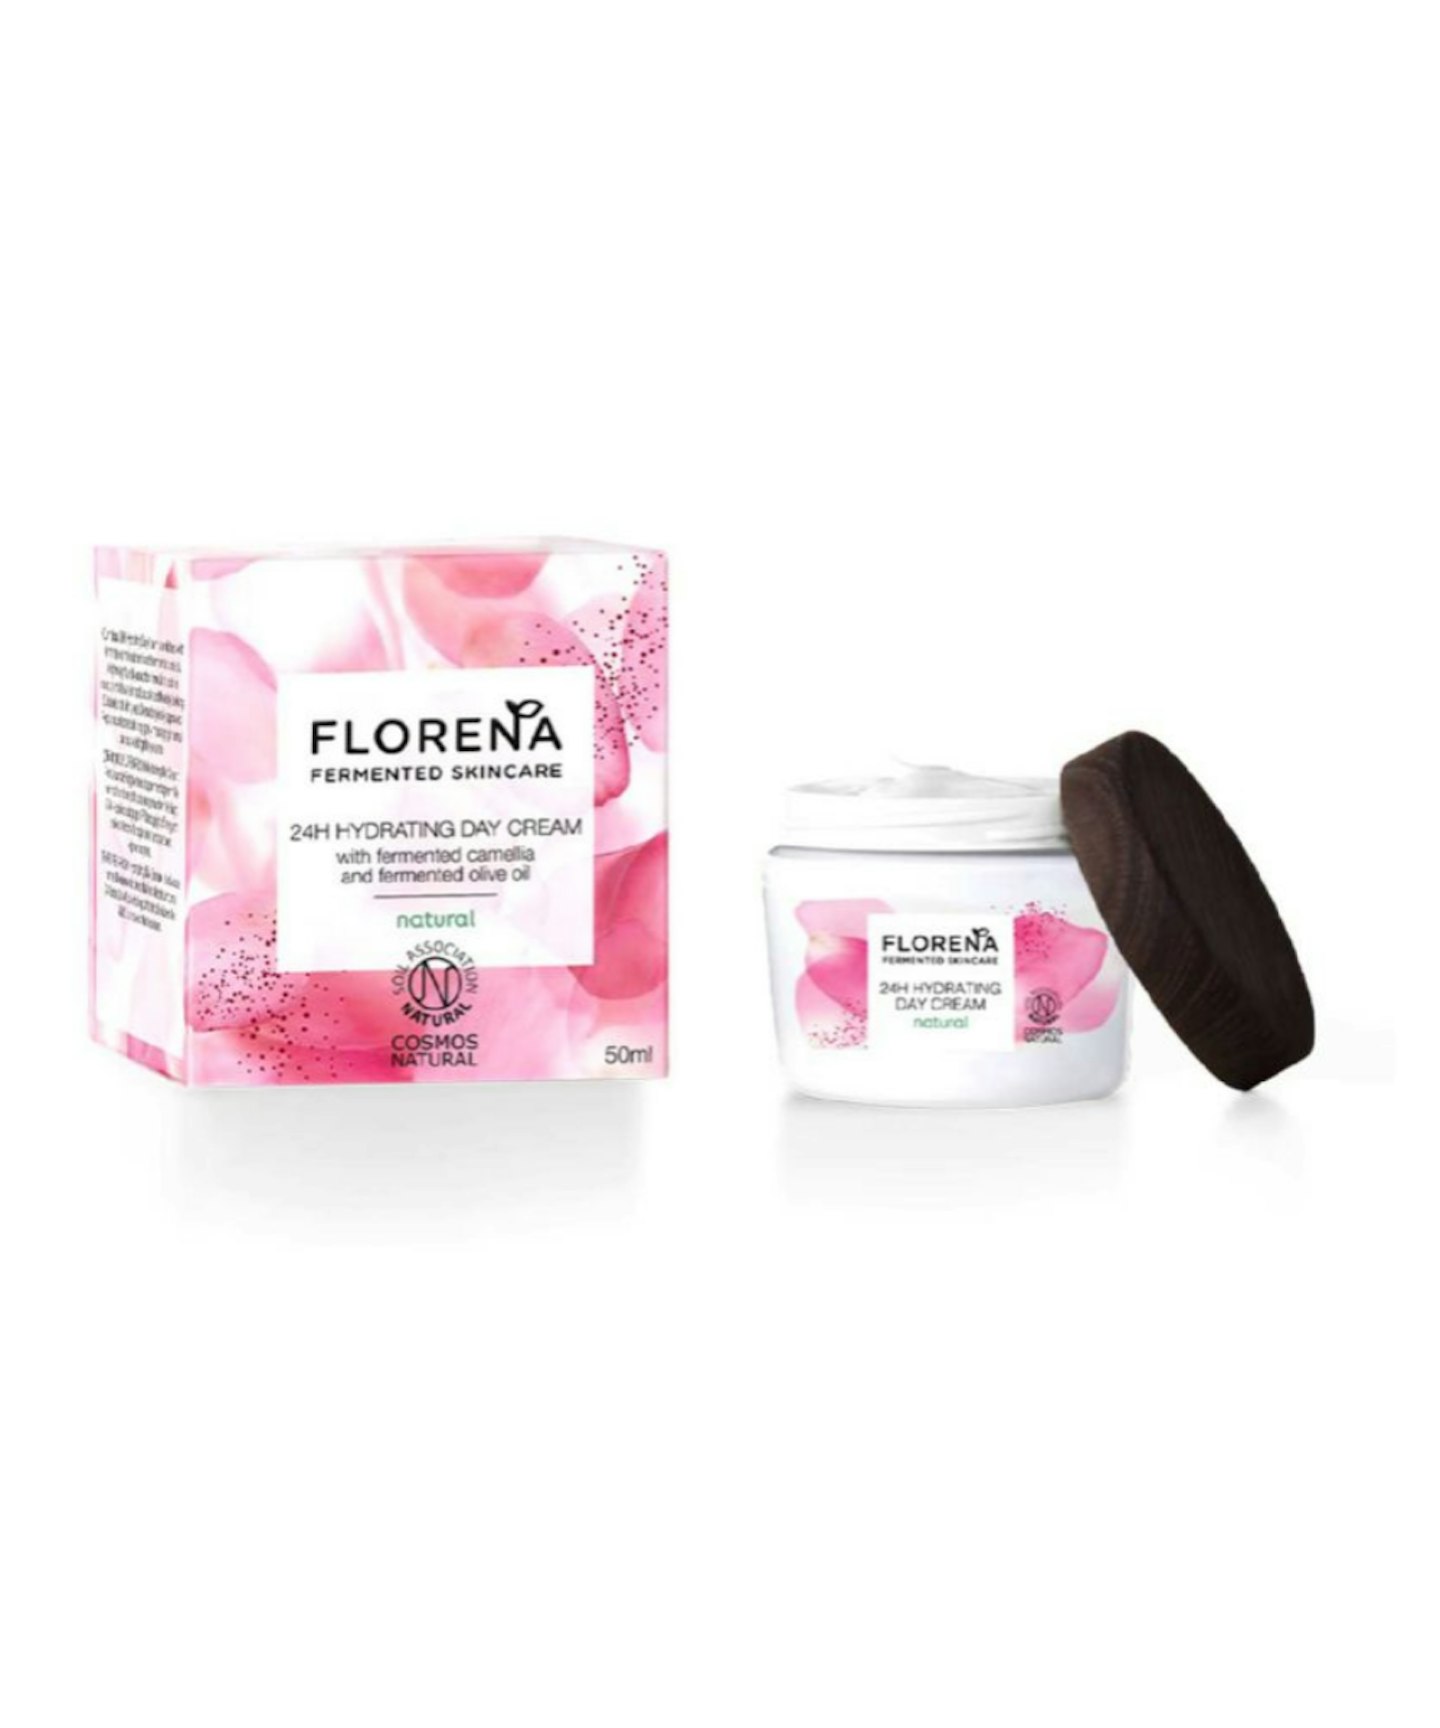 Florena Fermented Skincare 24H Hydrating Day Cream